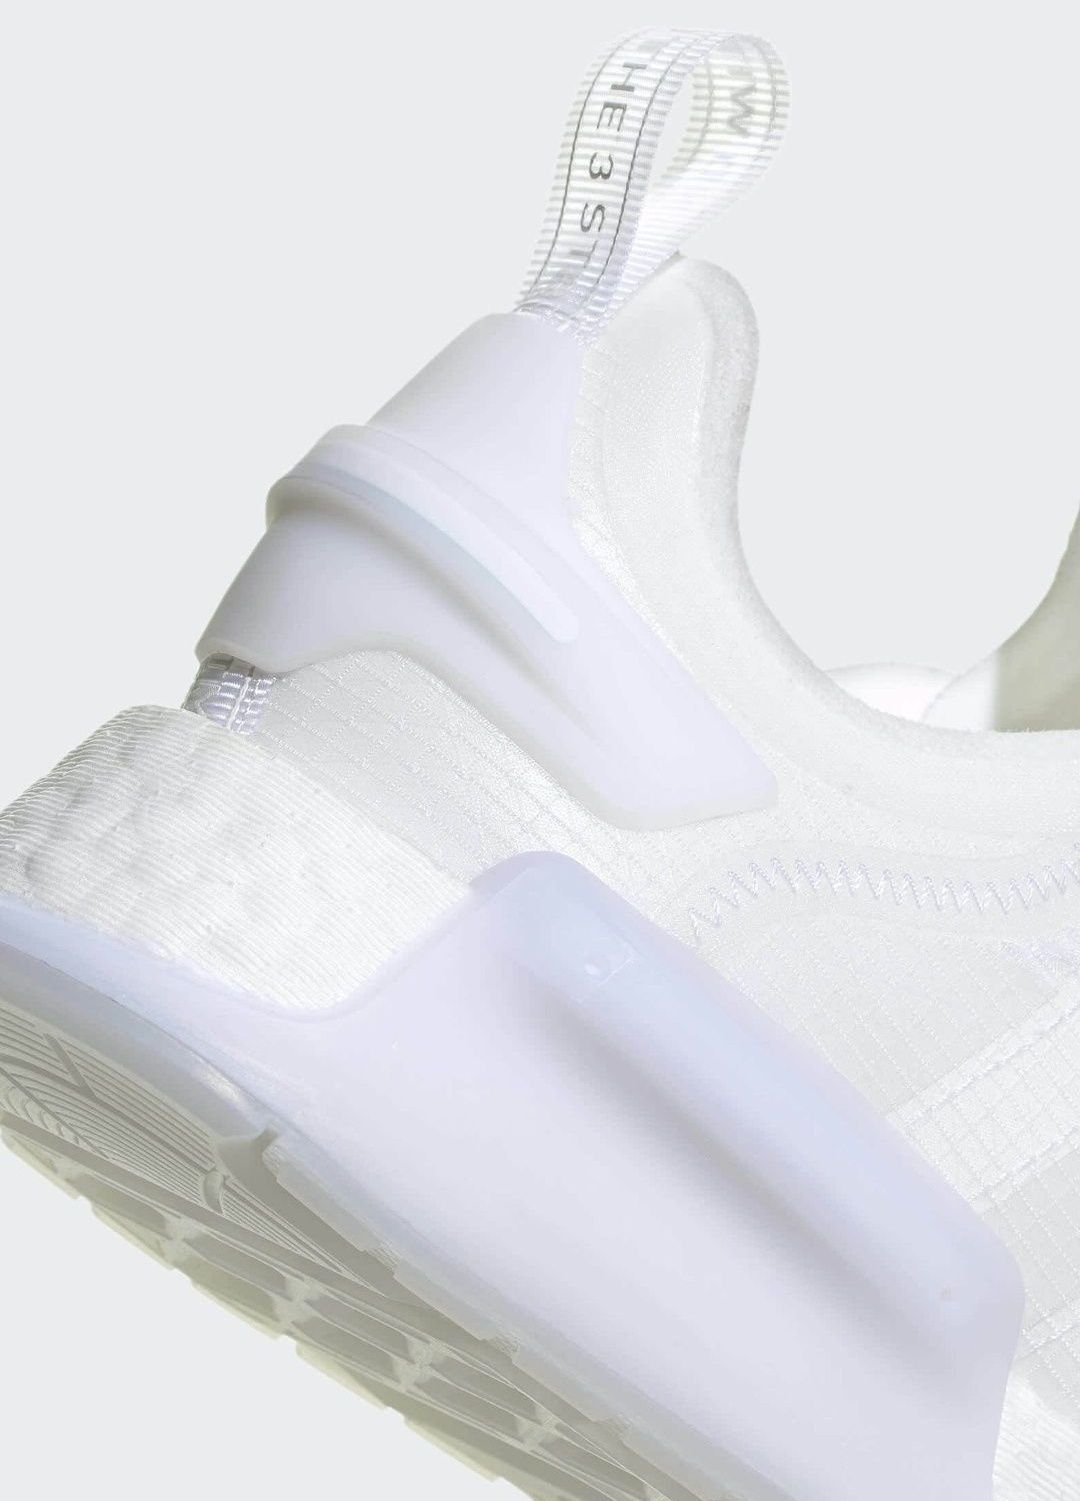 Nowe buty Adidas NMD V3 białe męskie 42,5 44 45 ultraboost boost zx